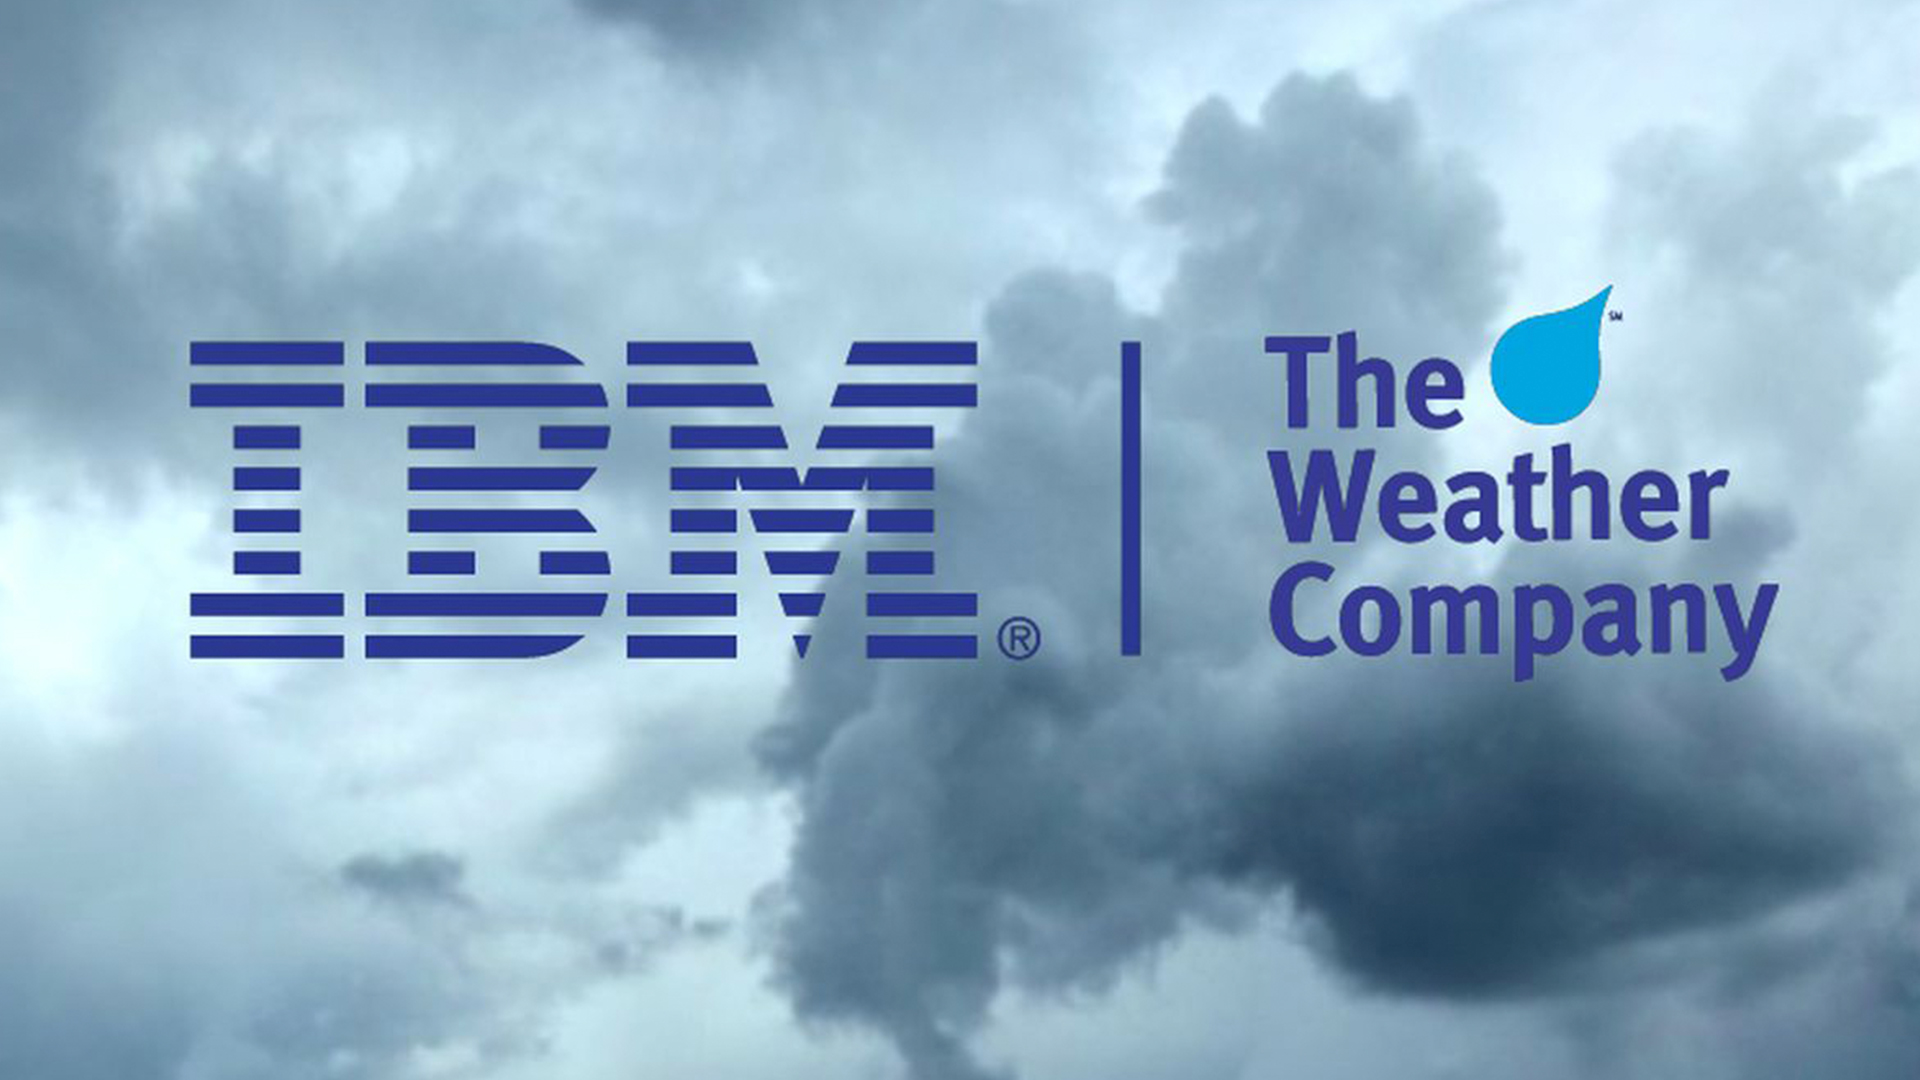 The Weather Company ของไอบีเอ็ม รั้งแชมป์ผู้ให้บริการพยากรณ์อากาศที่แม่นยำที่สุดในโลกต่อเนื่อง